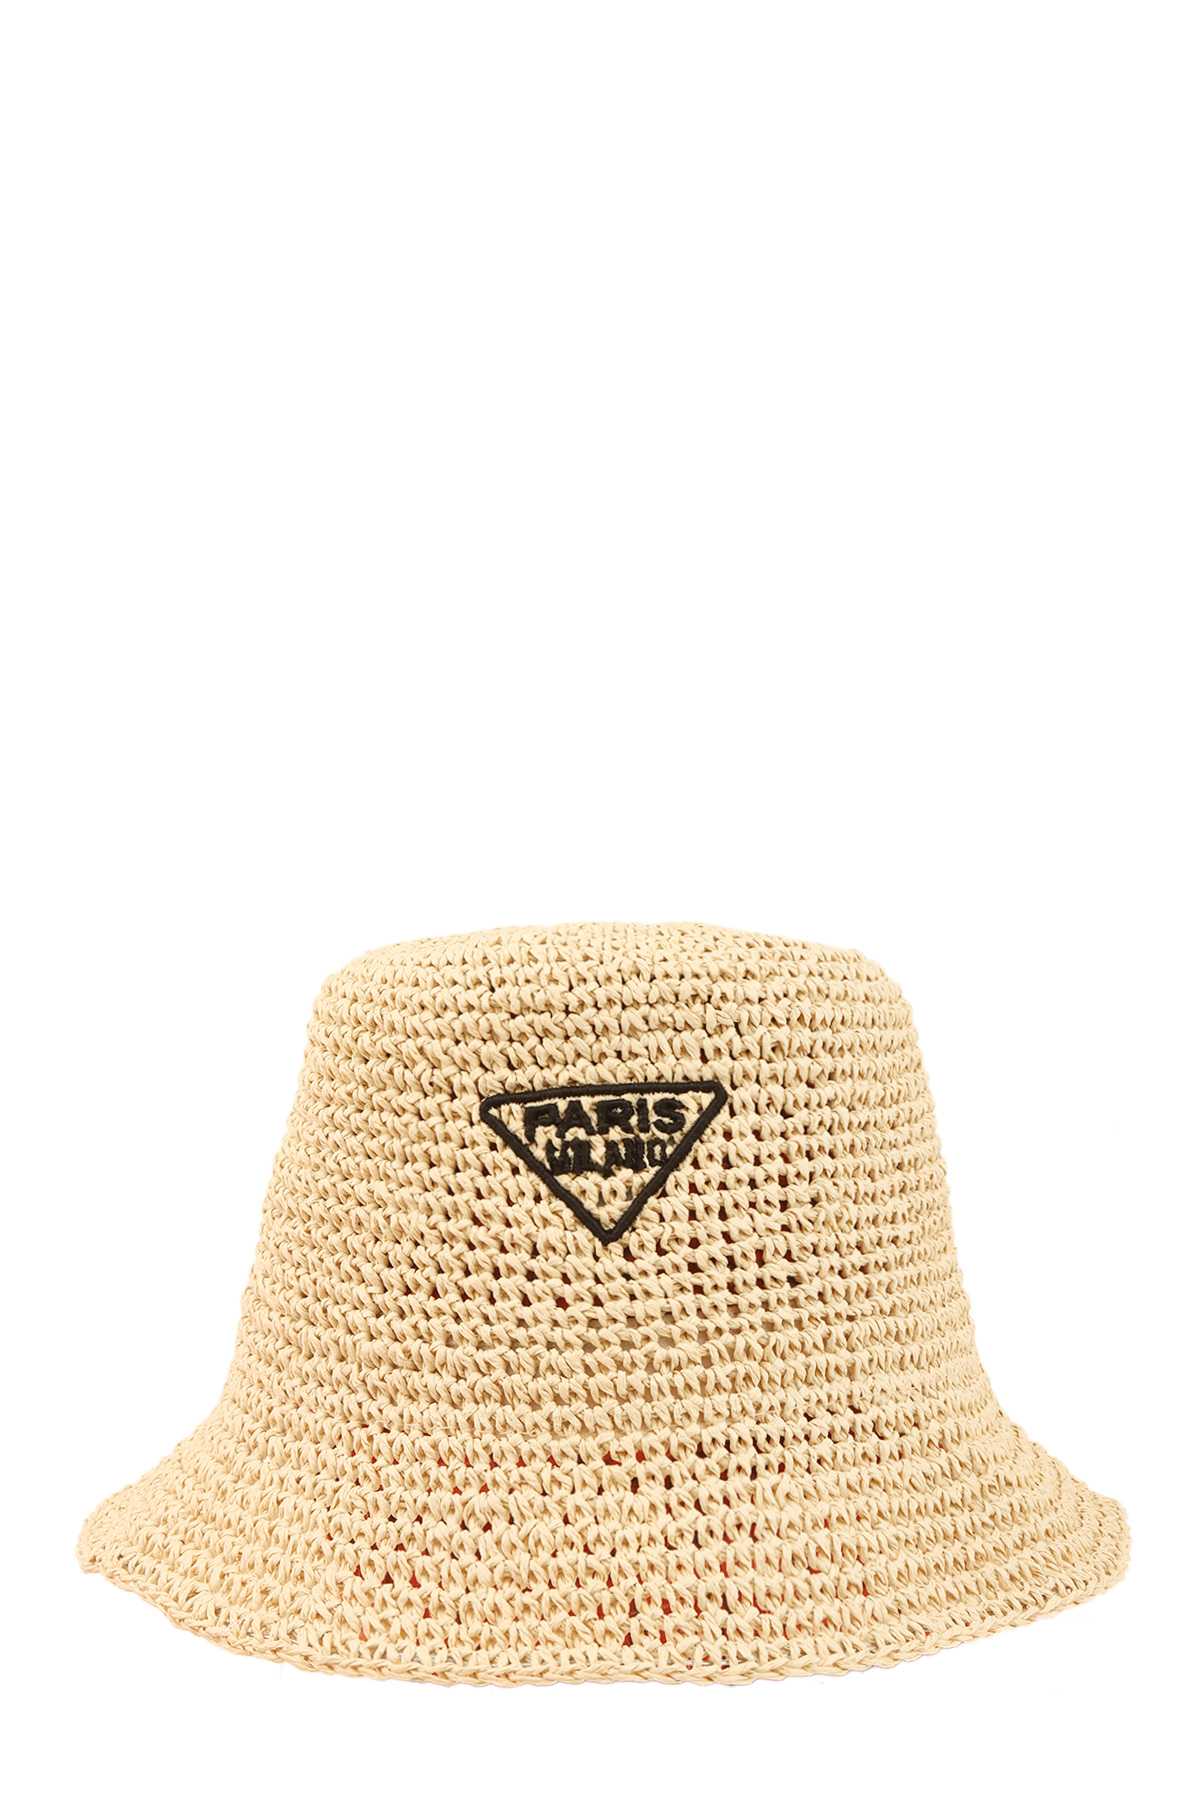 PARIS Embroidery Straw Bucket Hat